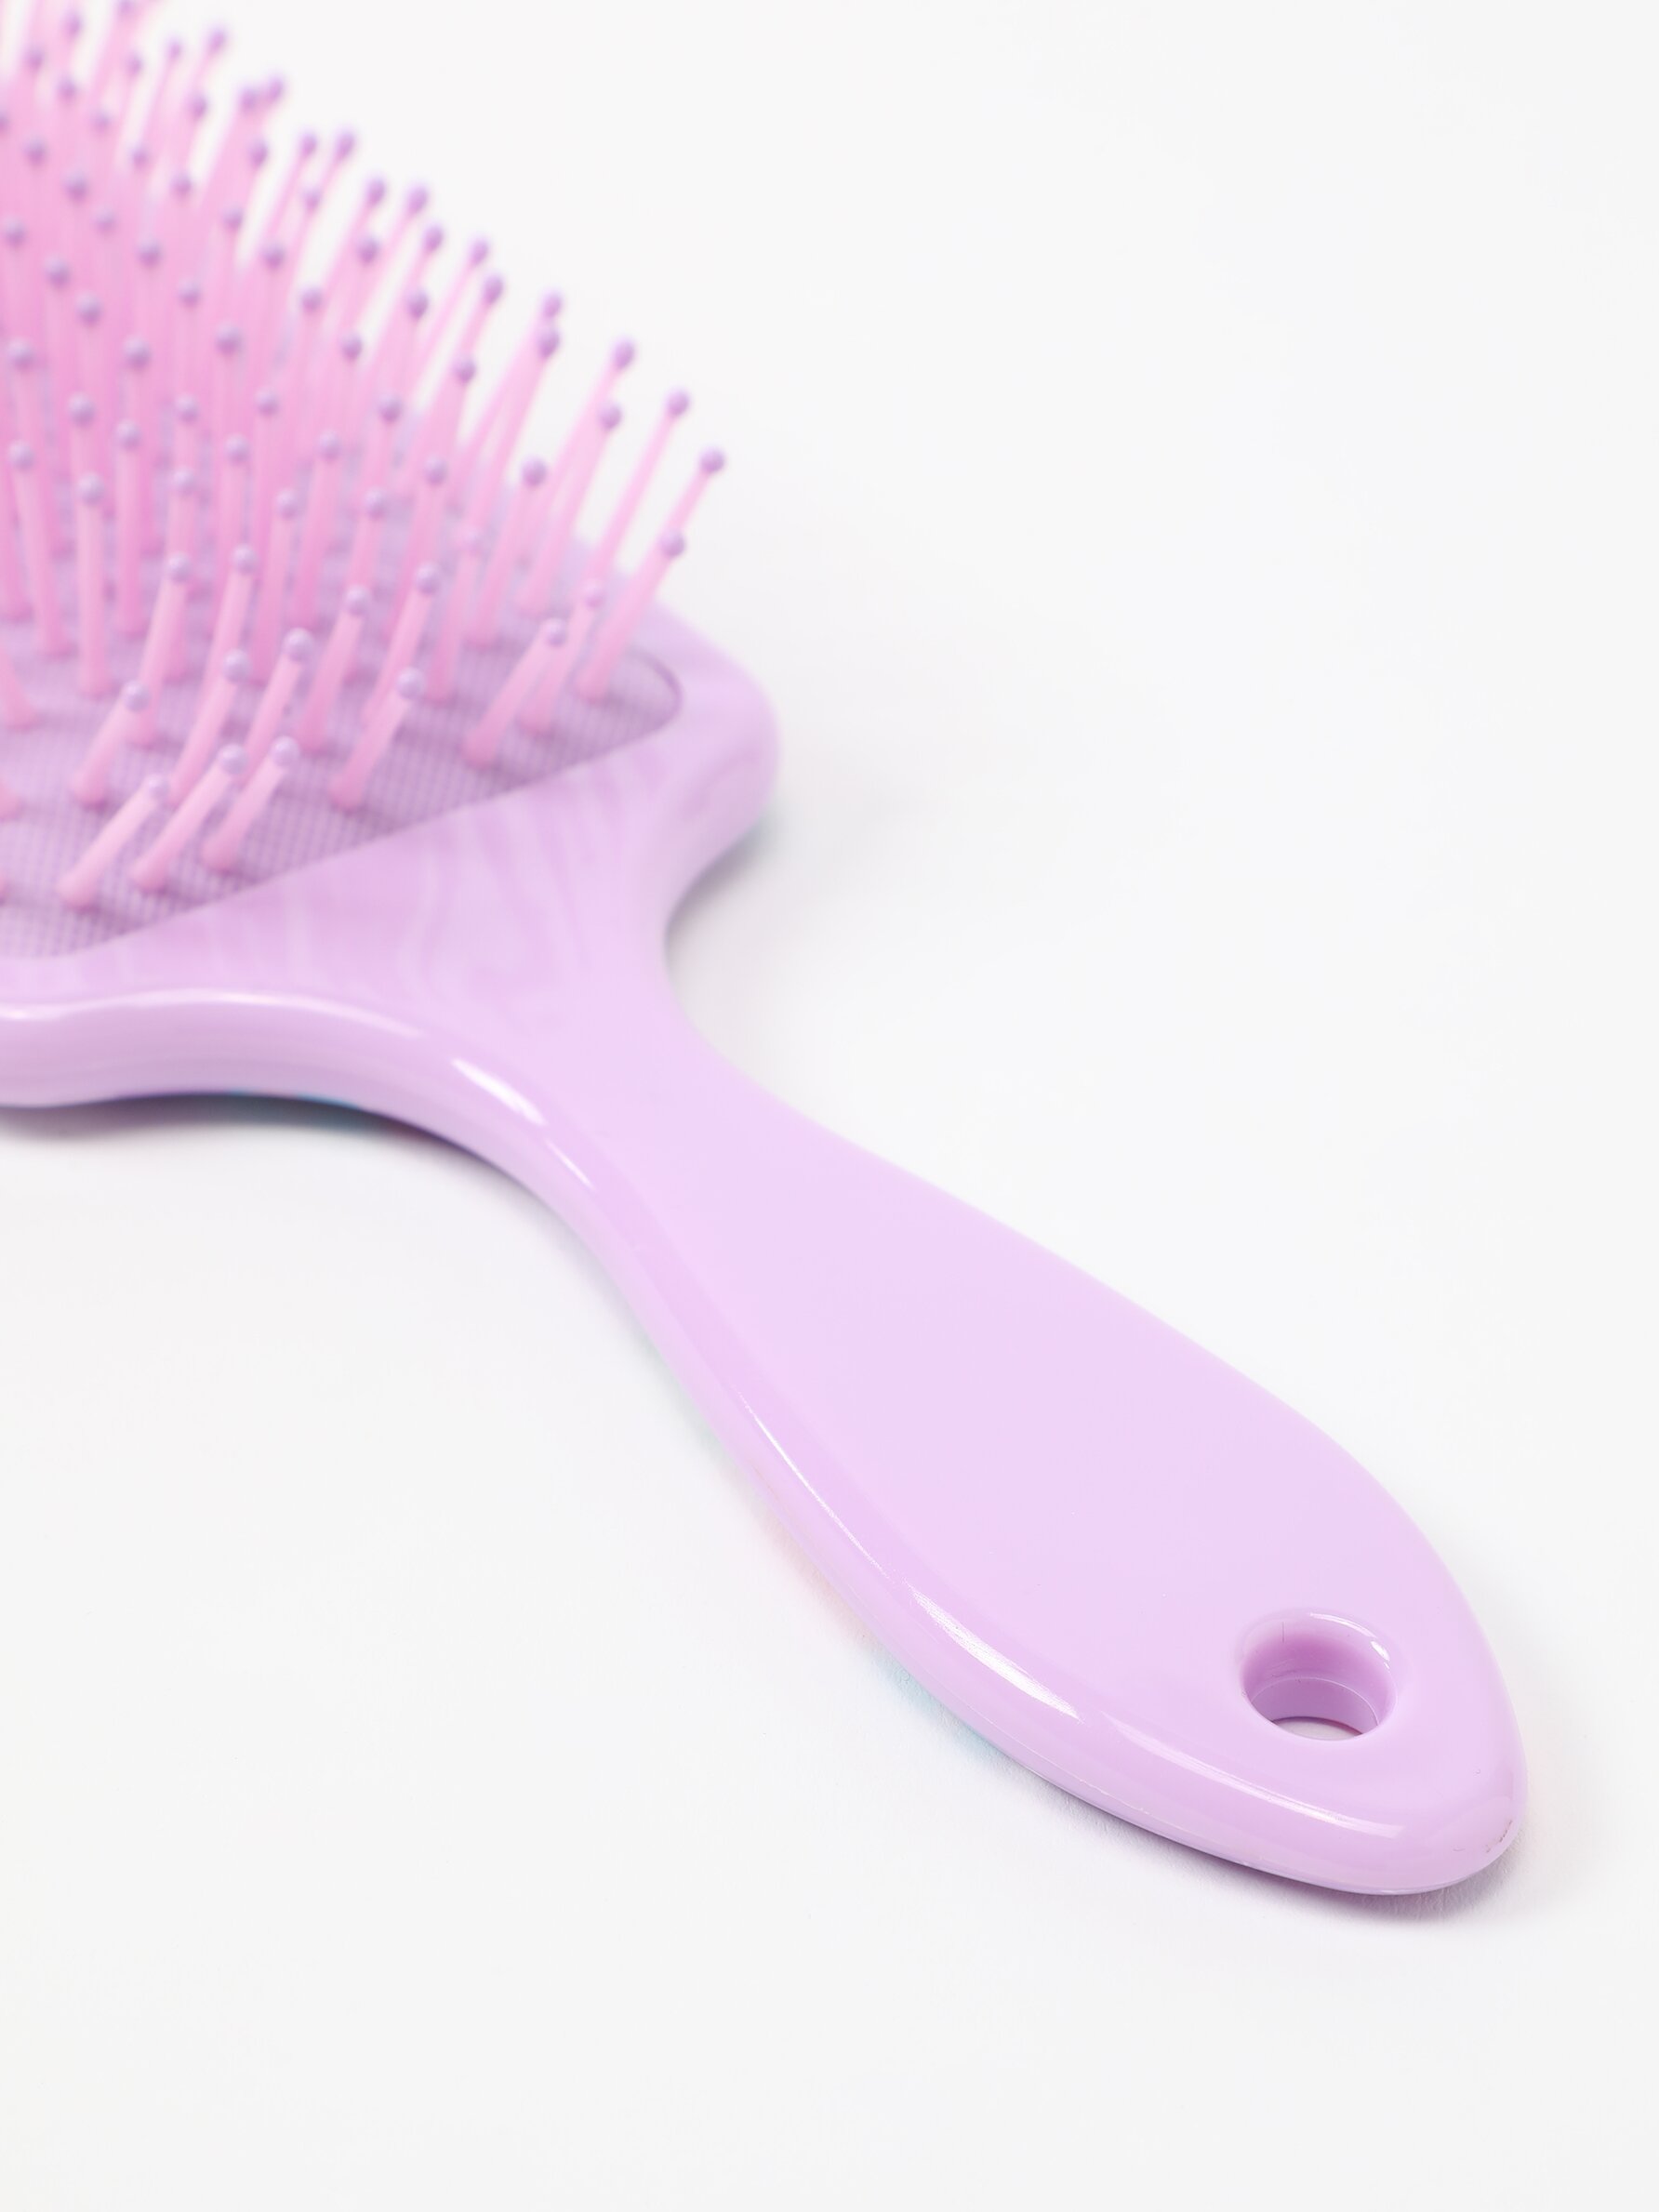 Barbie™ hair brush - Collabs - ACCESSORIES - Woman 